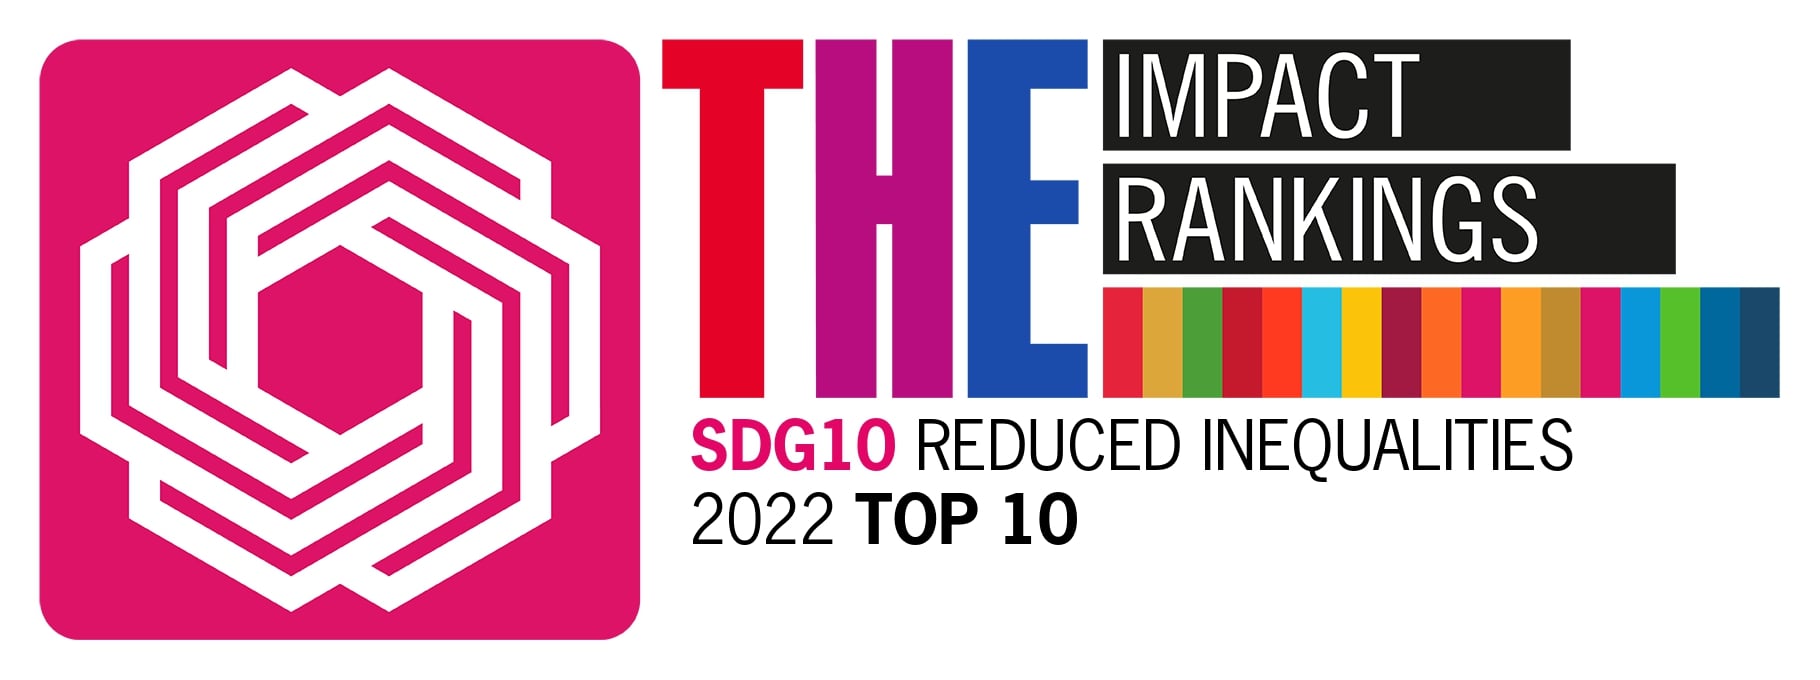 SDG's Goal 10: Reduce inequalities logo